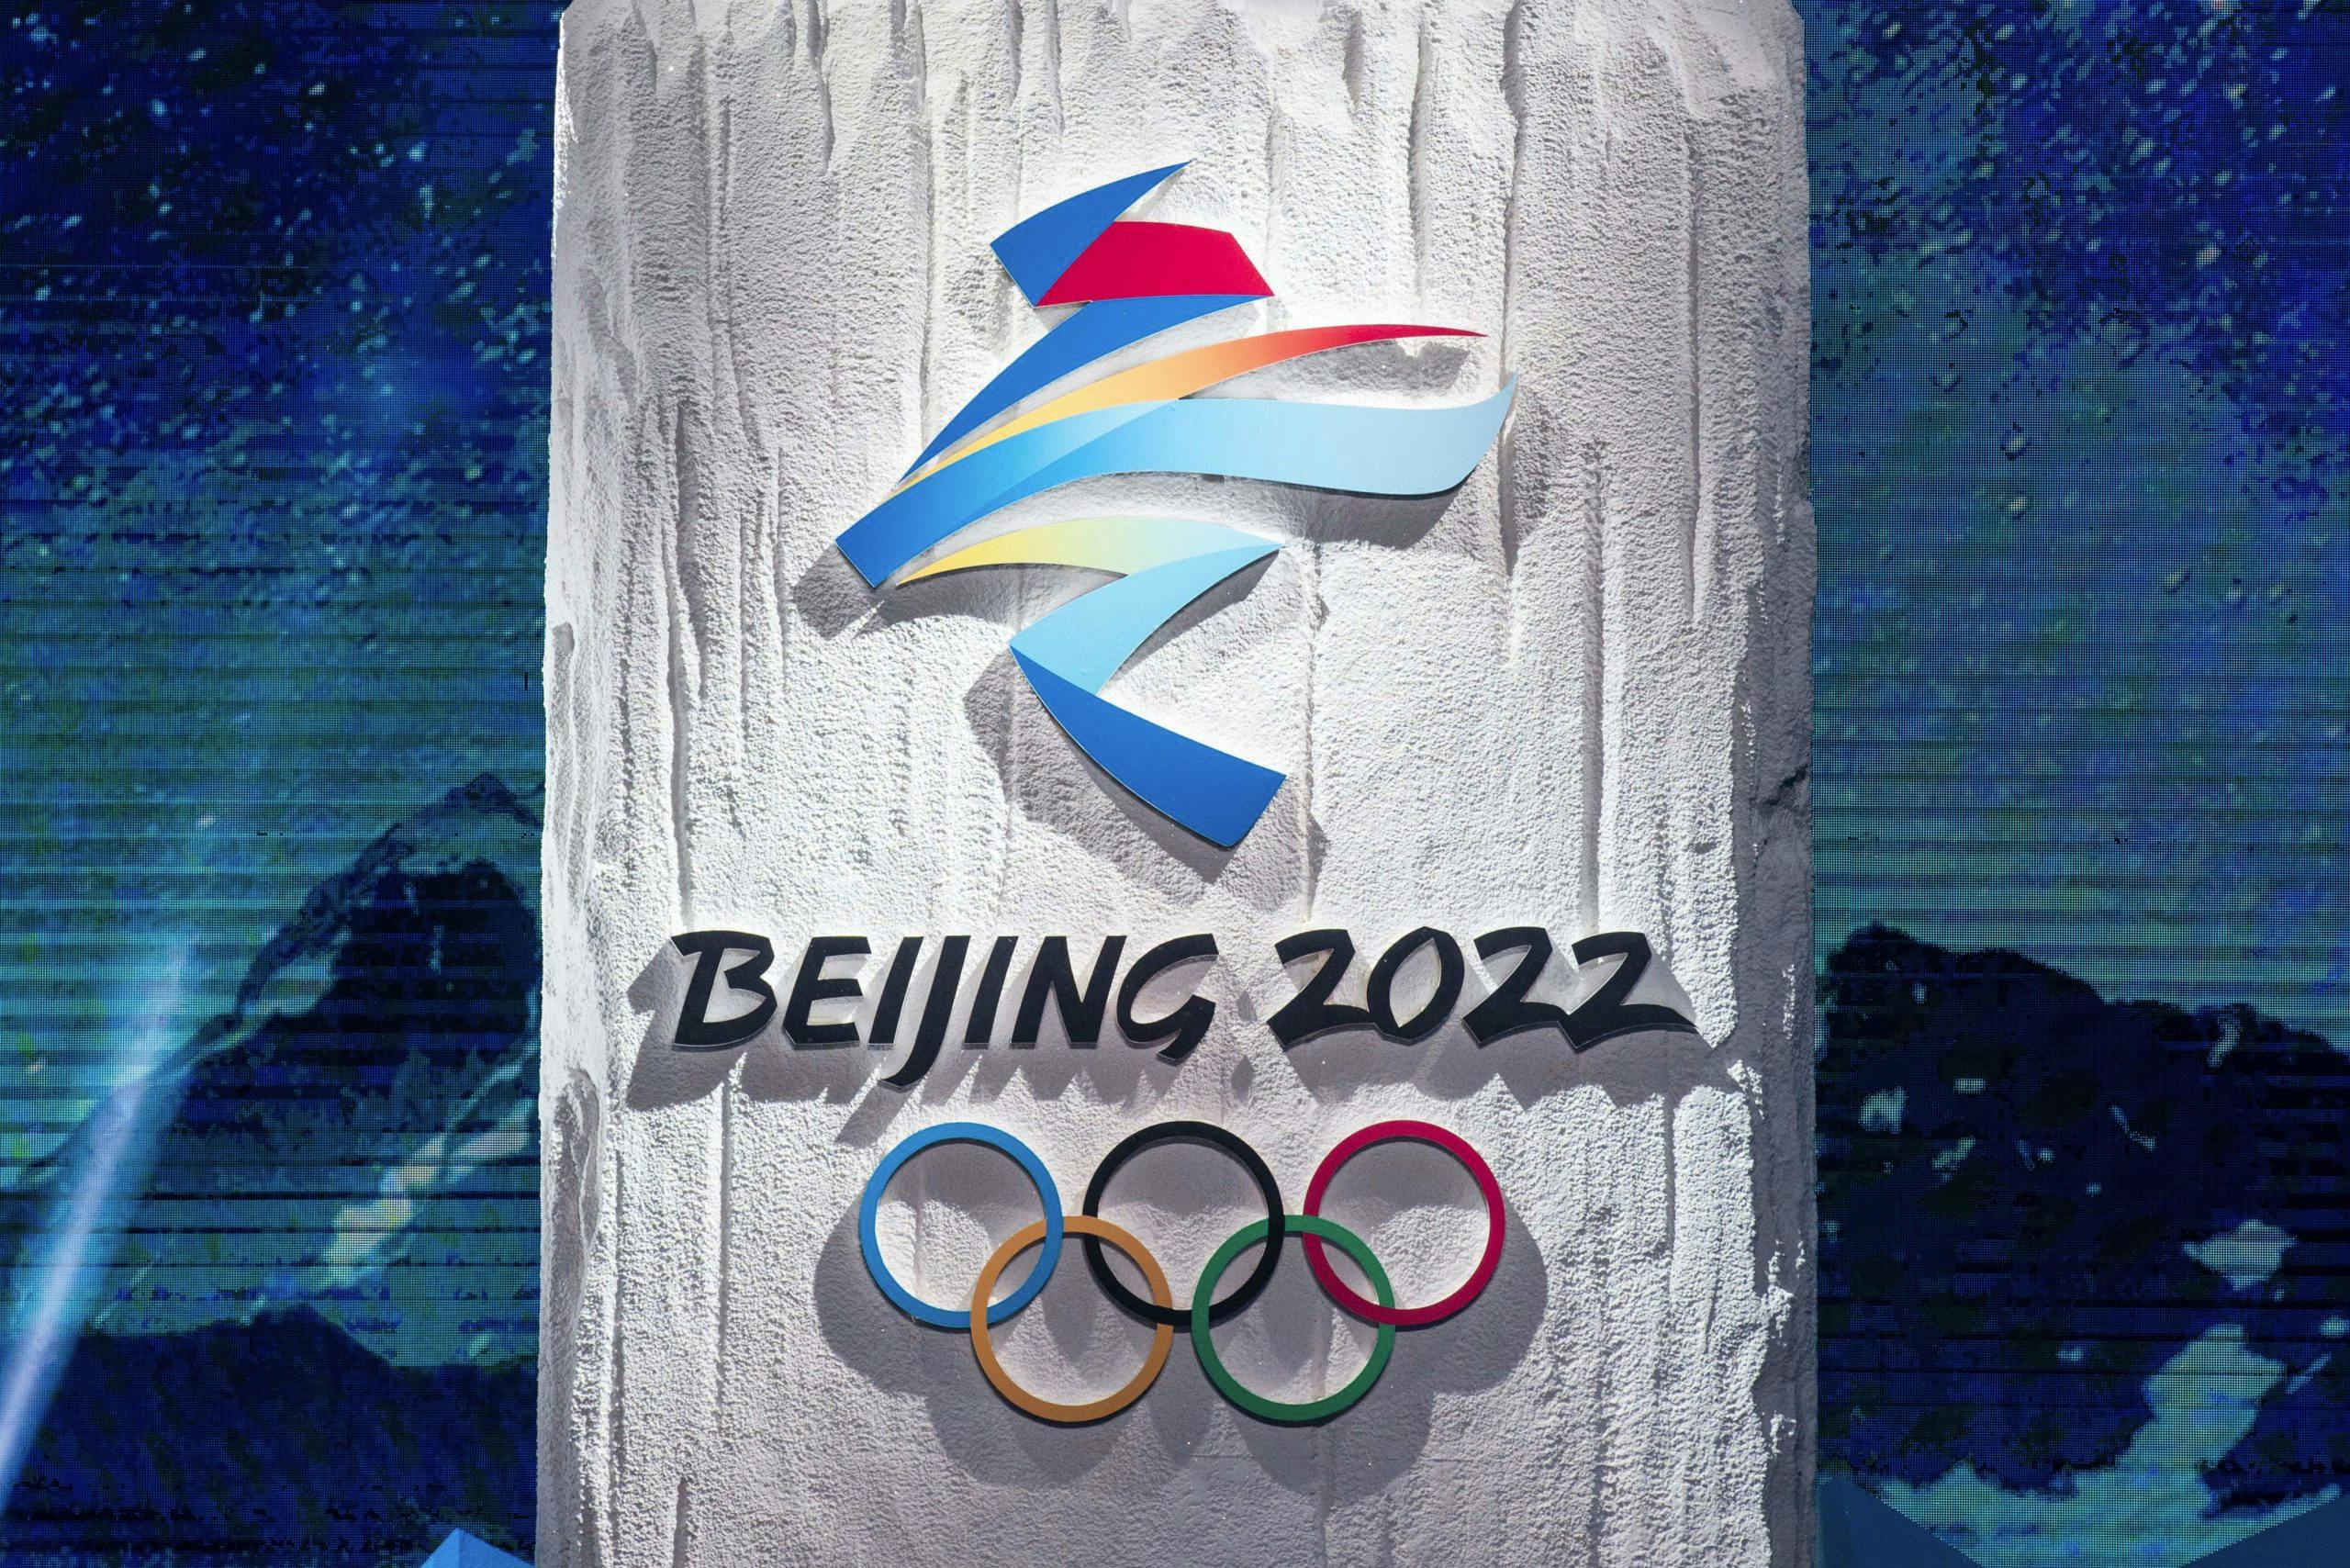 The men's hockey schedule for the 2022 Beijing Olympics has been announced